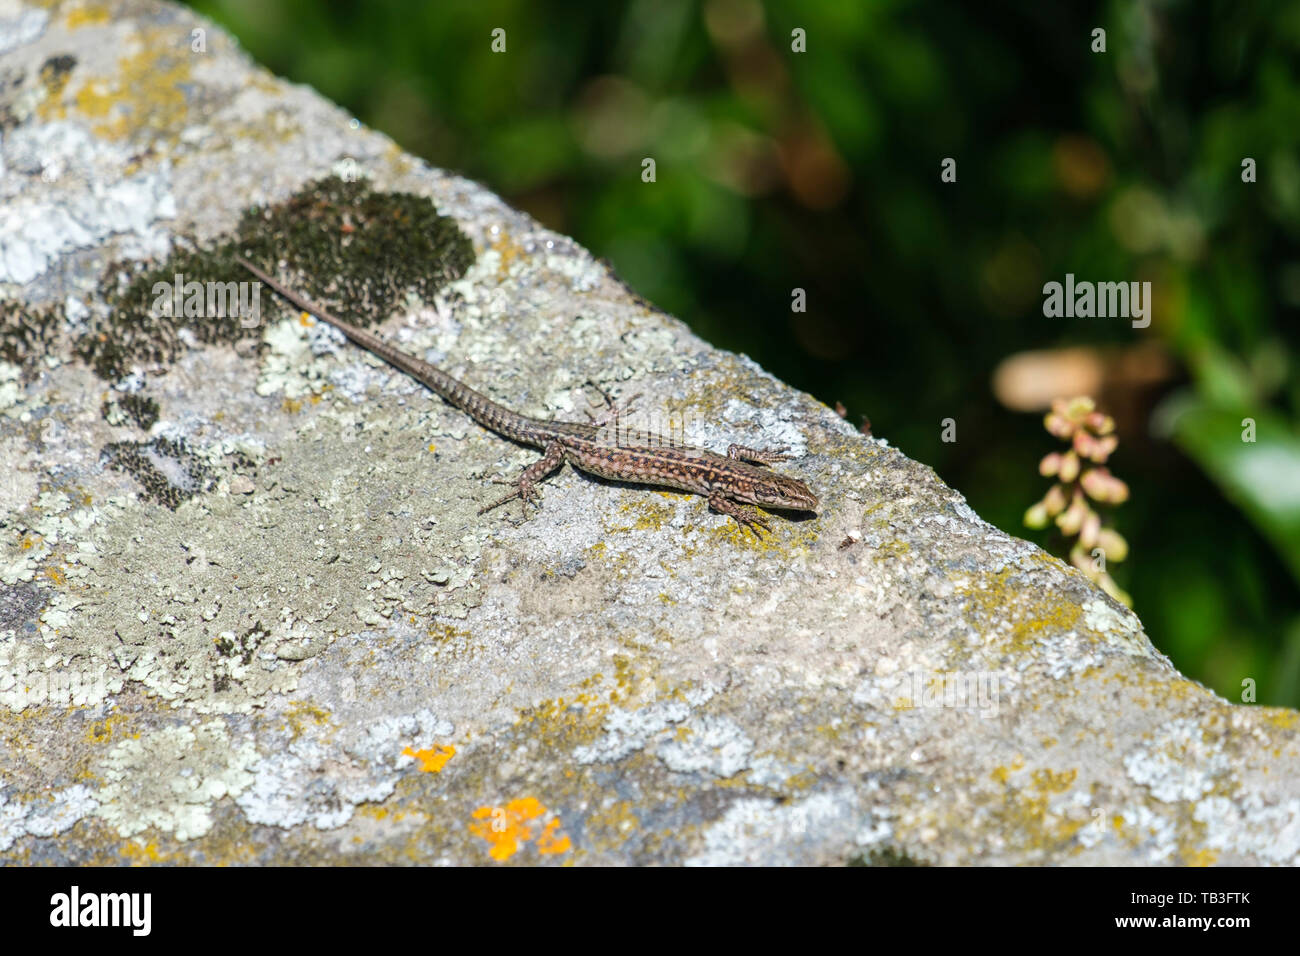 Small lizard sunbathing on top of a rock Stock Photo